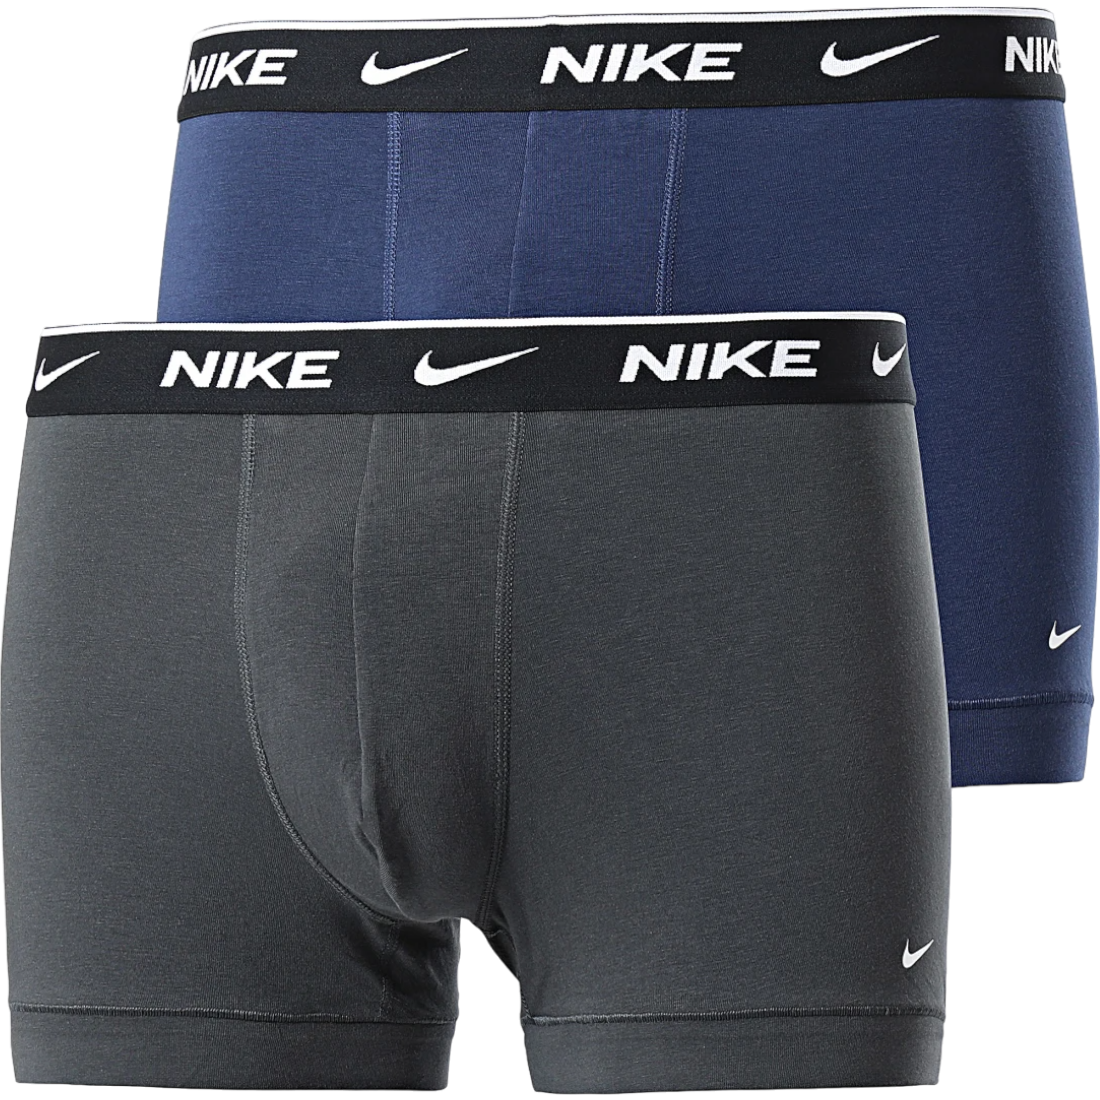 Bokserice Nike Cotton Trunk 2 pcs